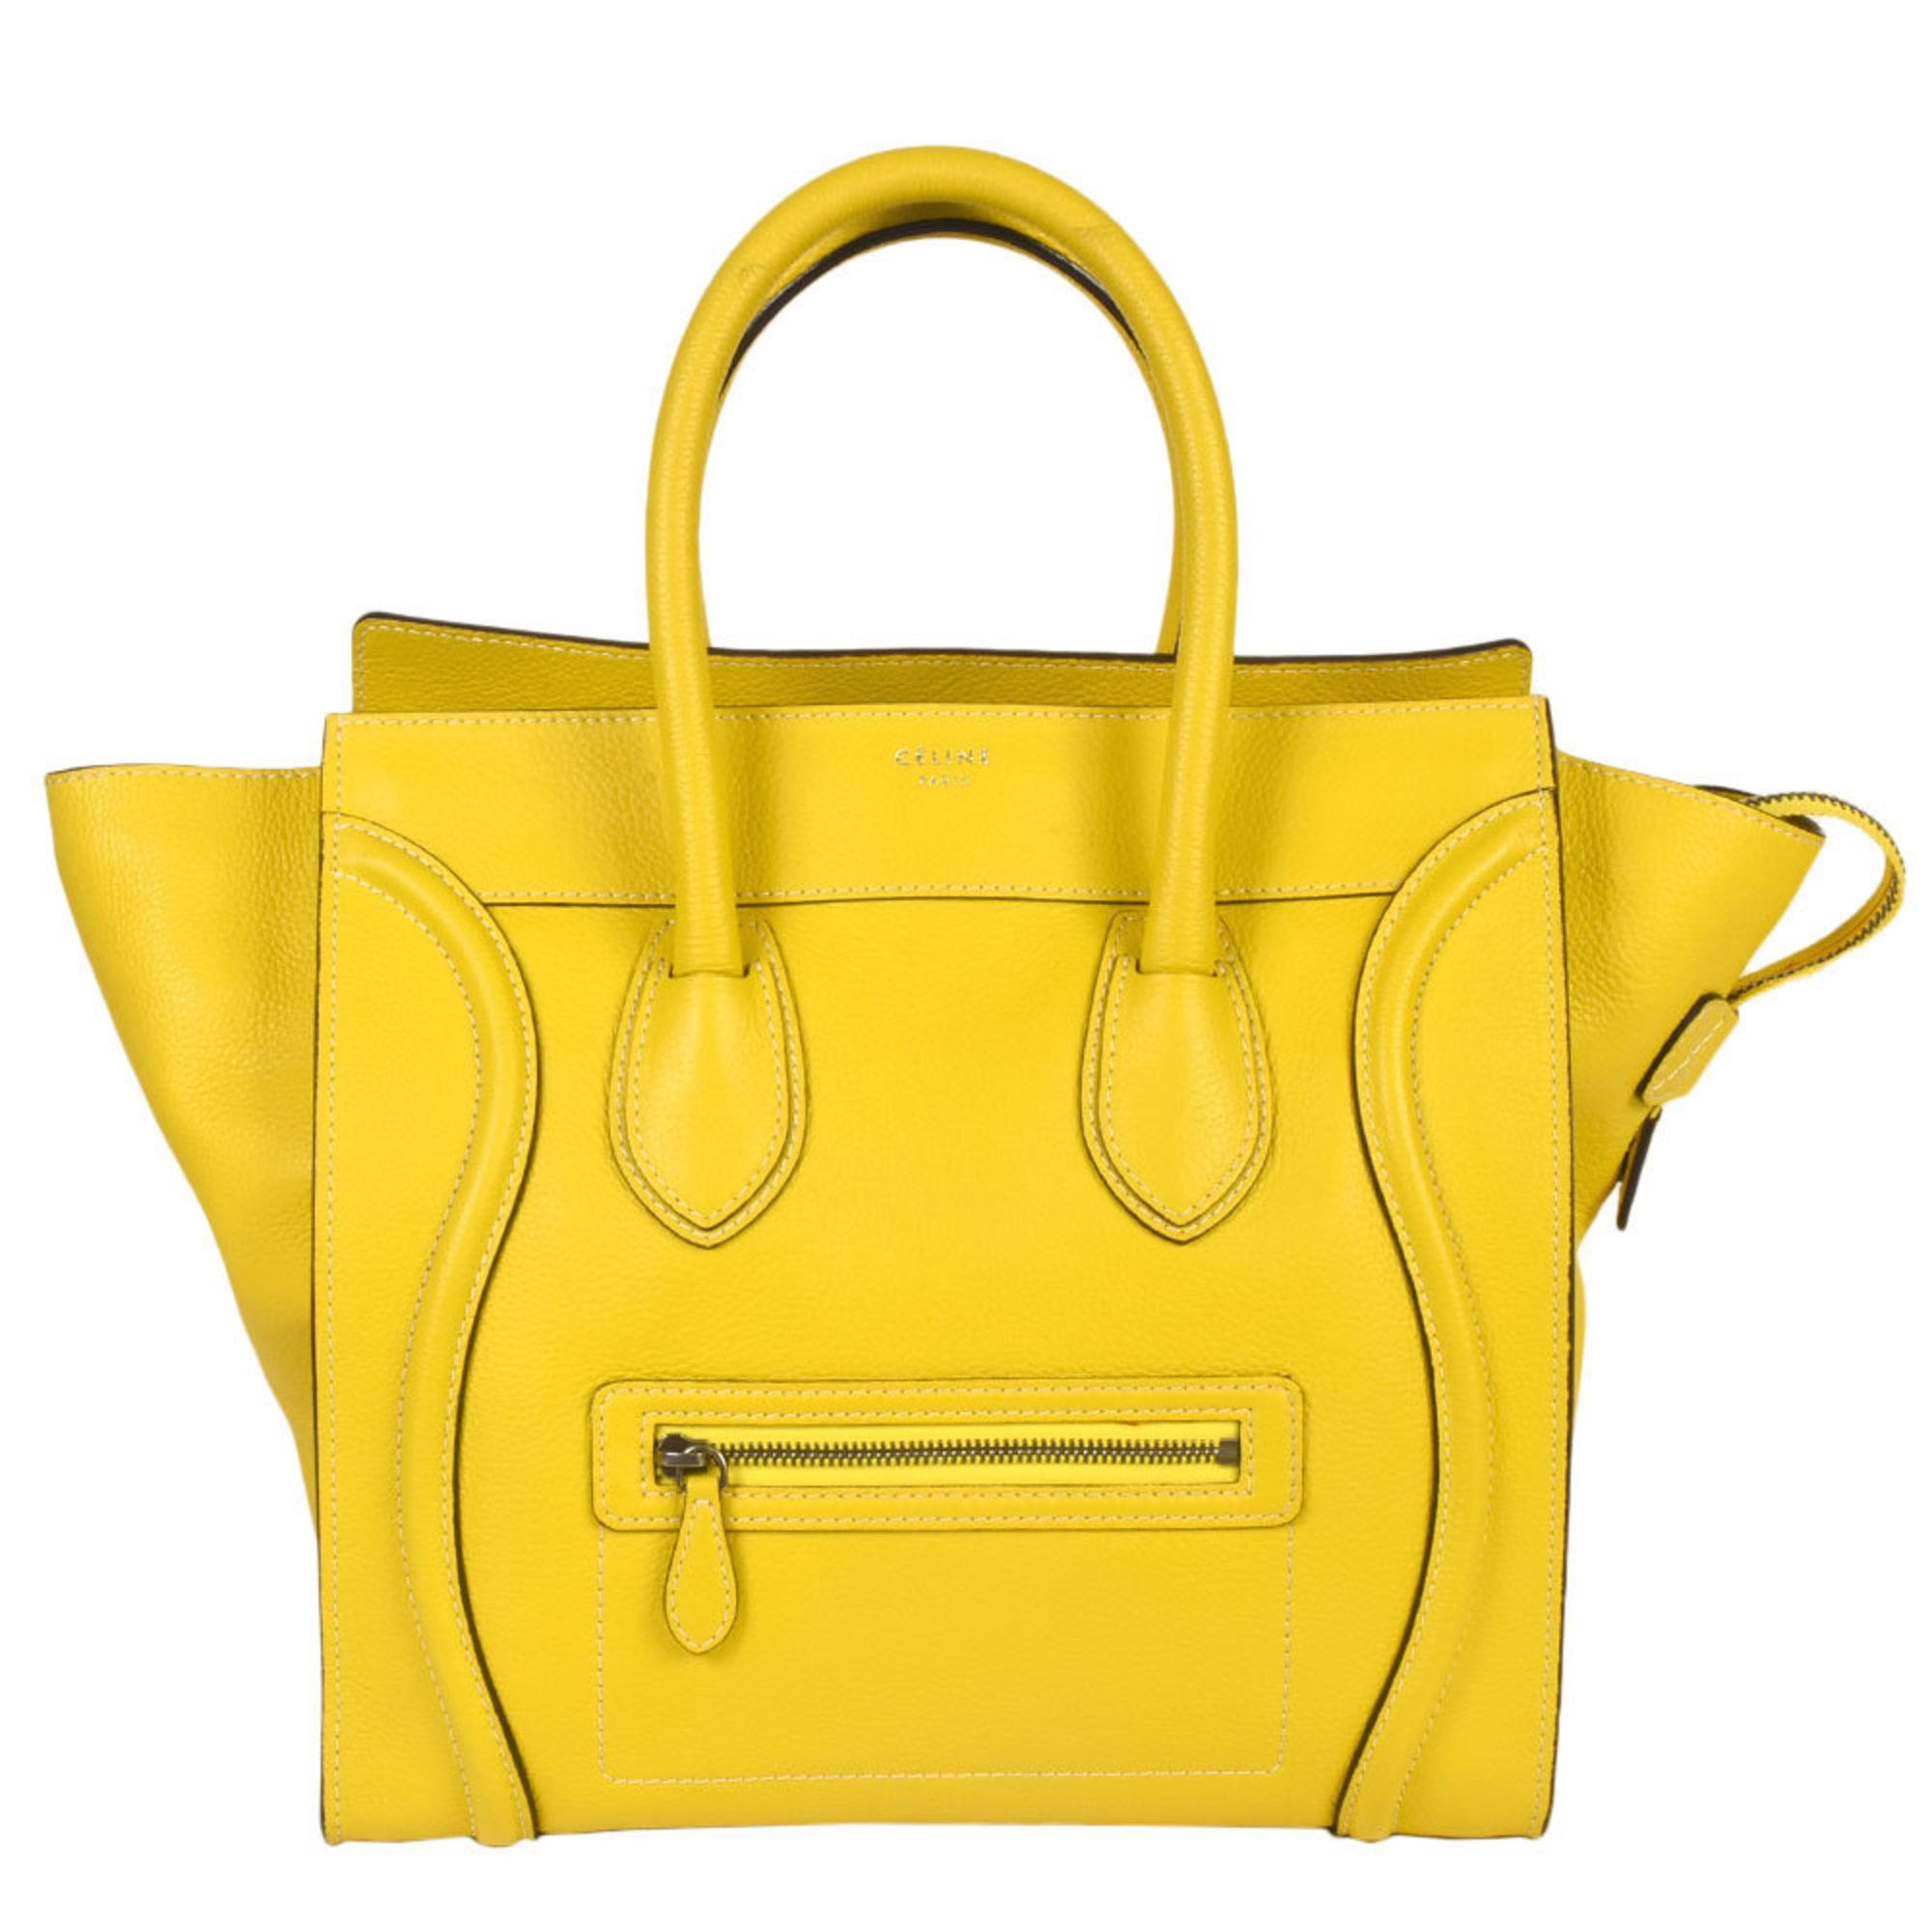 image of Celine Céline Luggage Handbag in Yellow, Women's